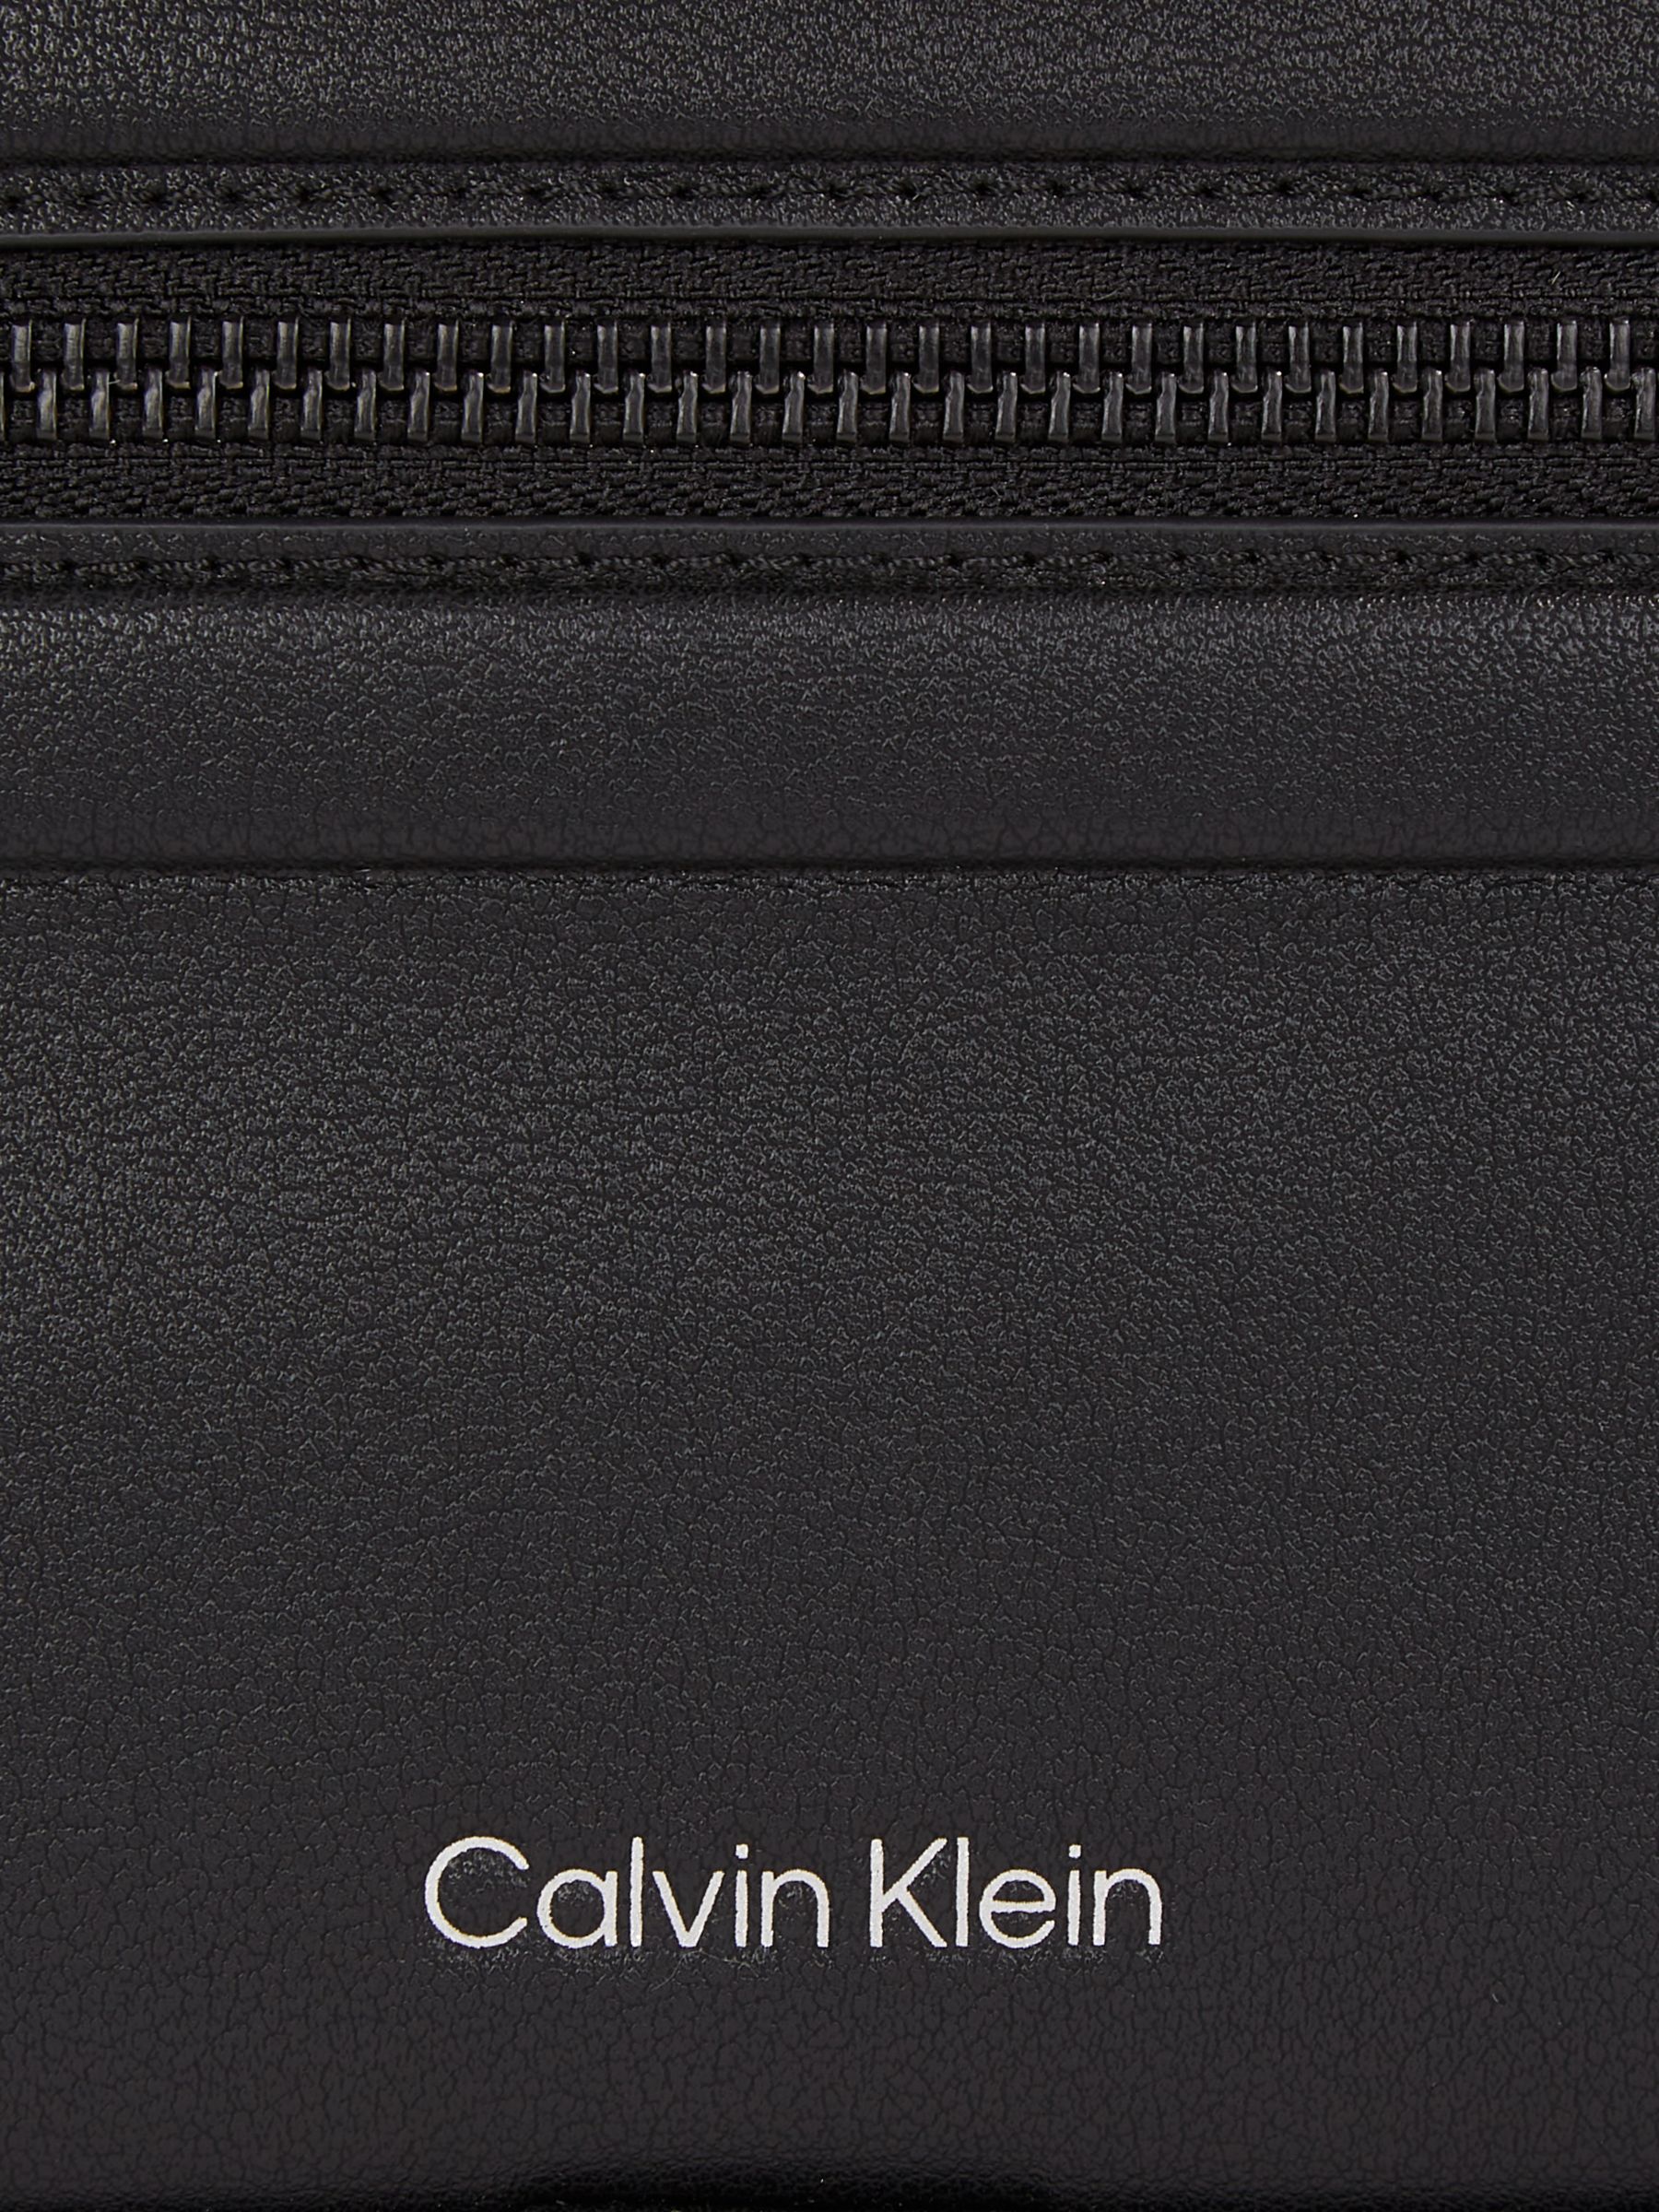 Calvin Klein Elevated Camera Bag, Black, One Size